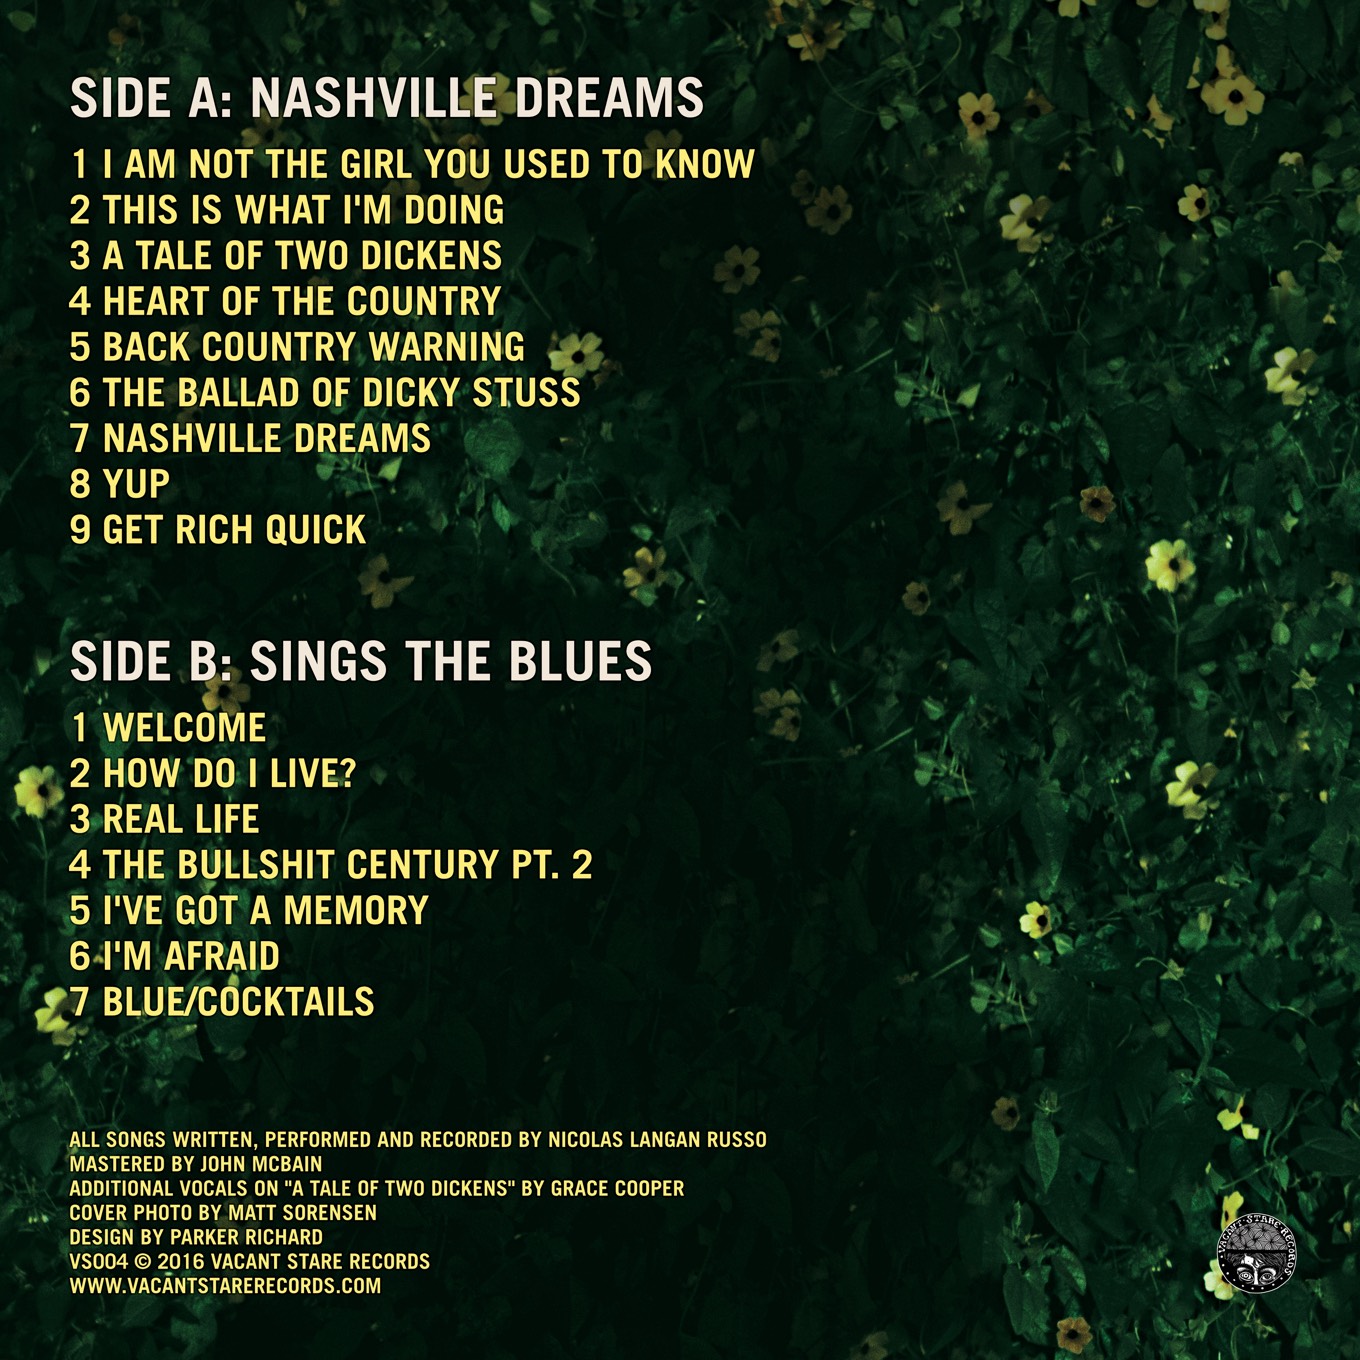 Reverse of Dick Stusso Nashville Dreams/Sings the Blues album jacket design